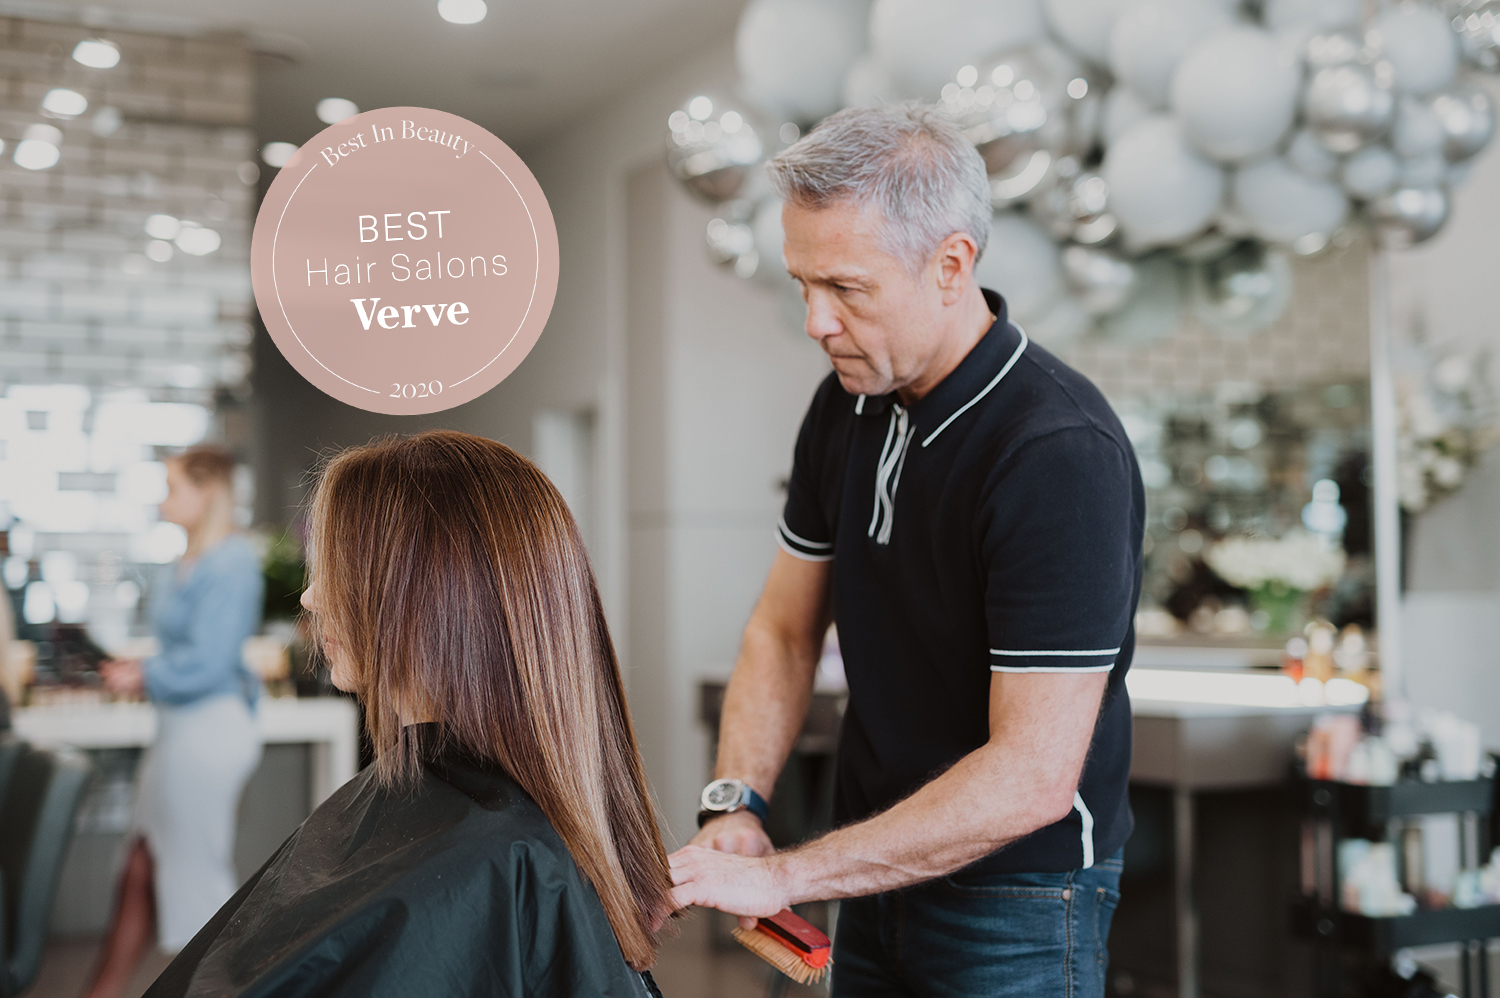 Best Hair Salons | Verve Best In Beauty 2020 - Verve Magazine